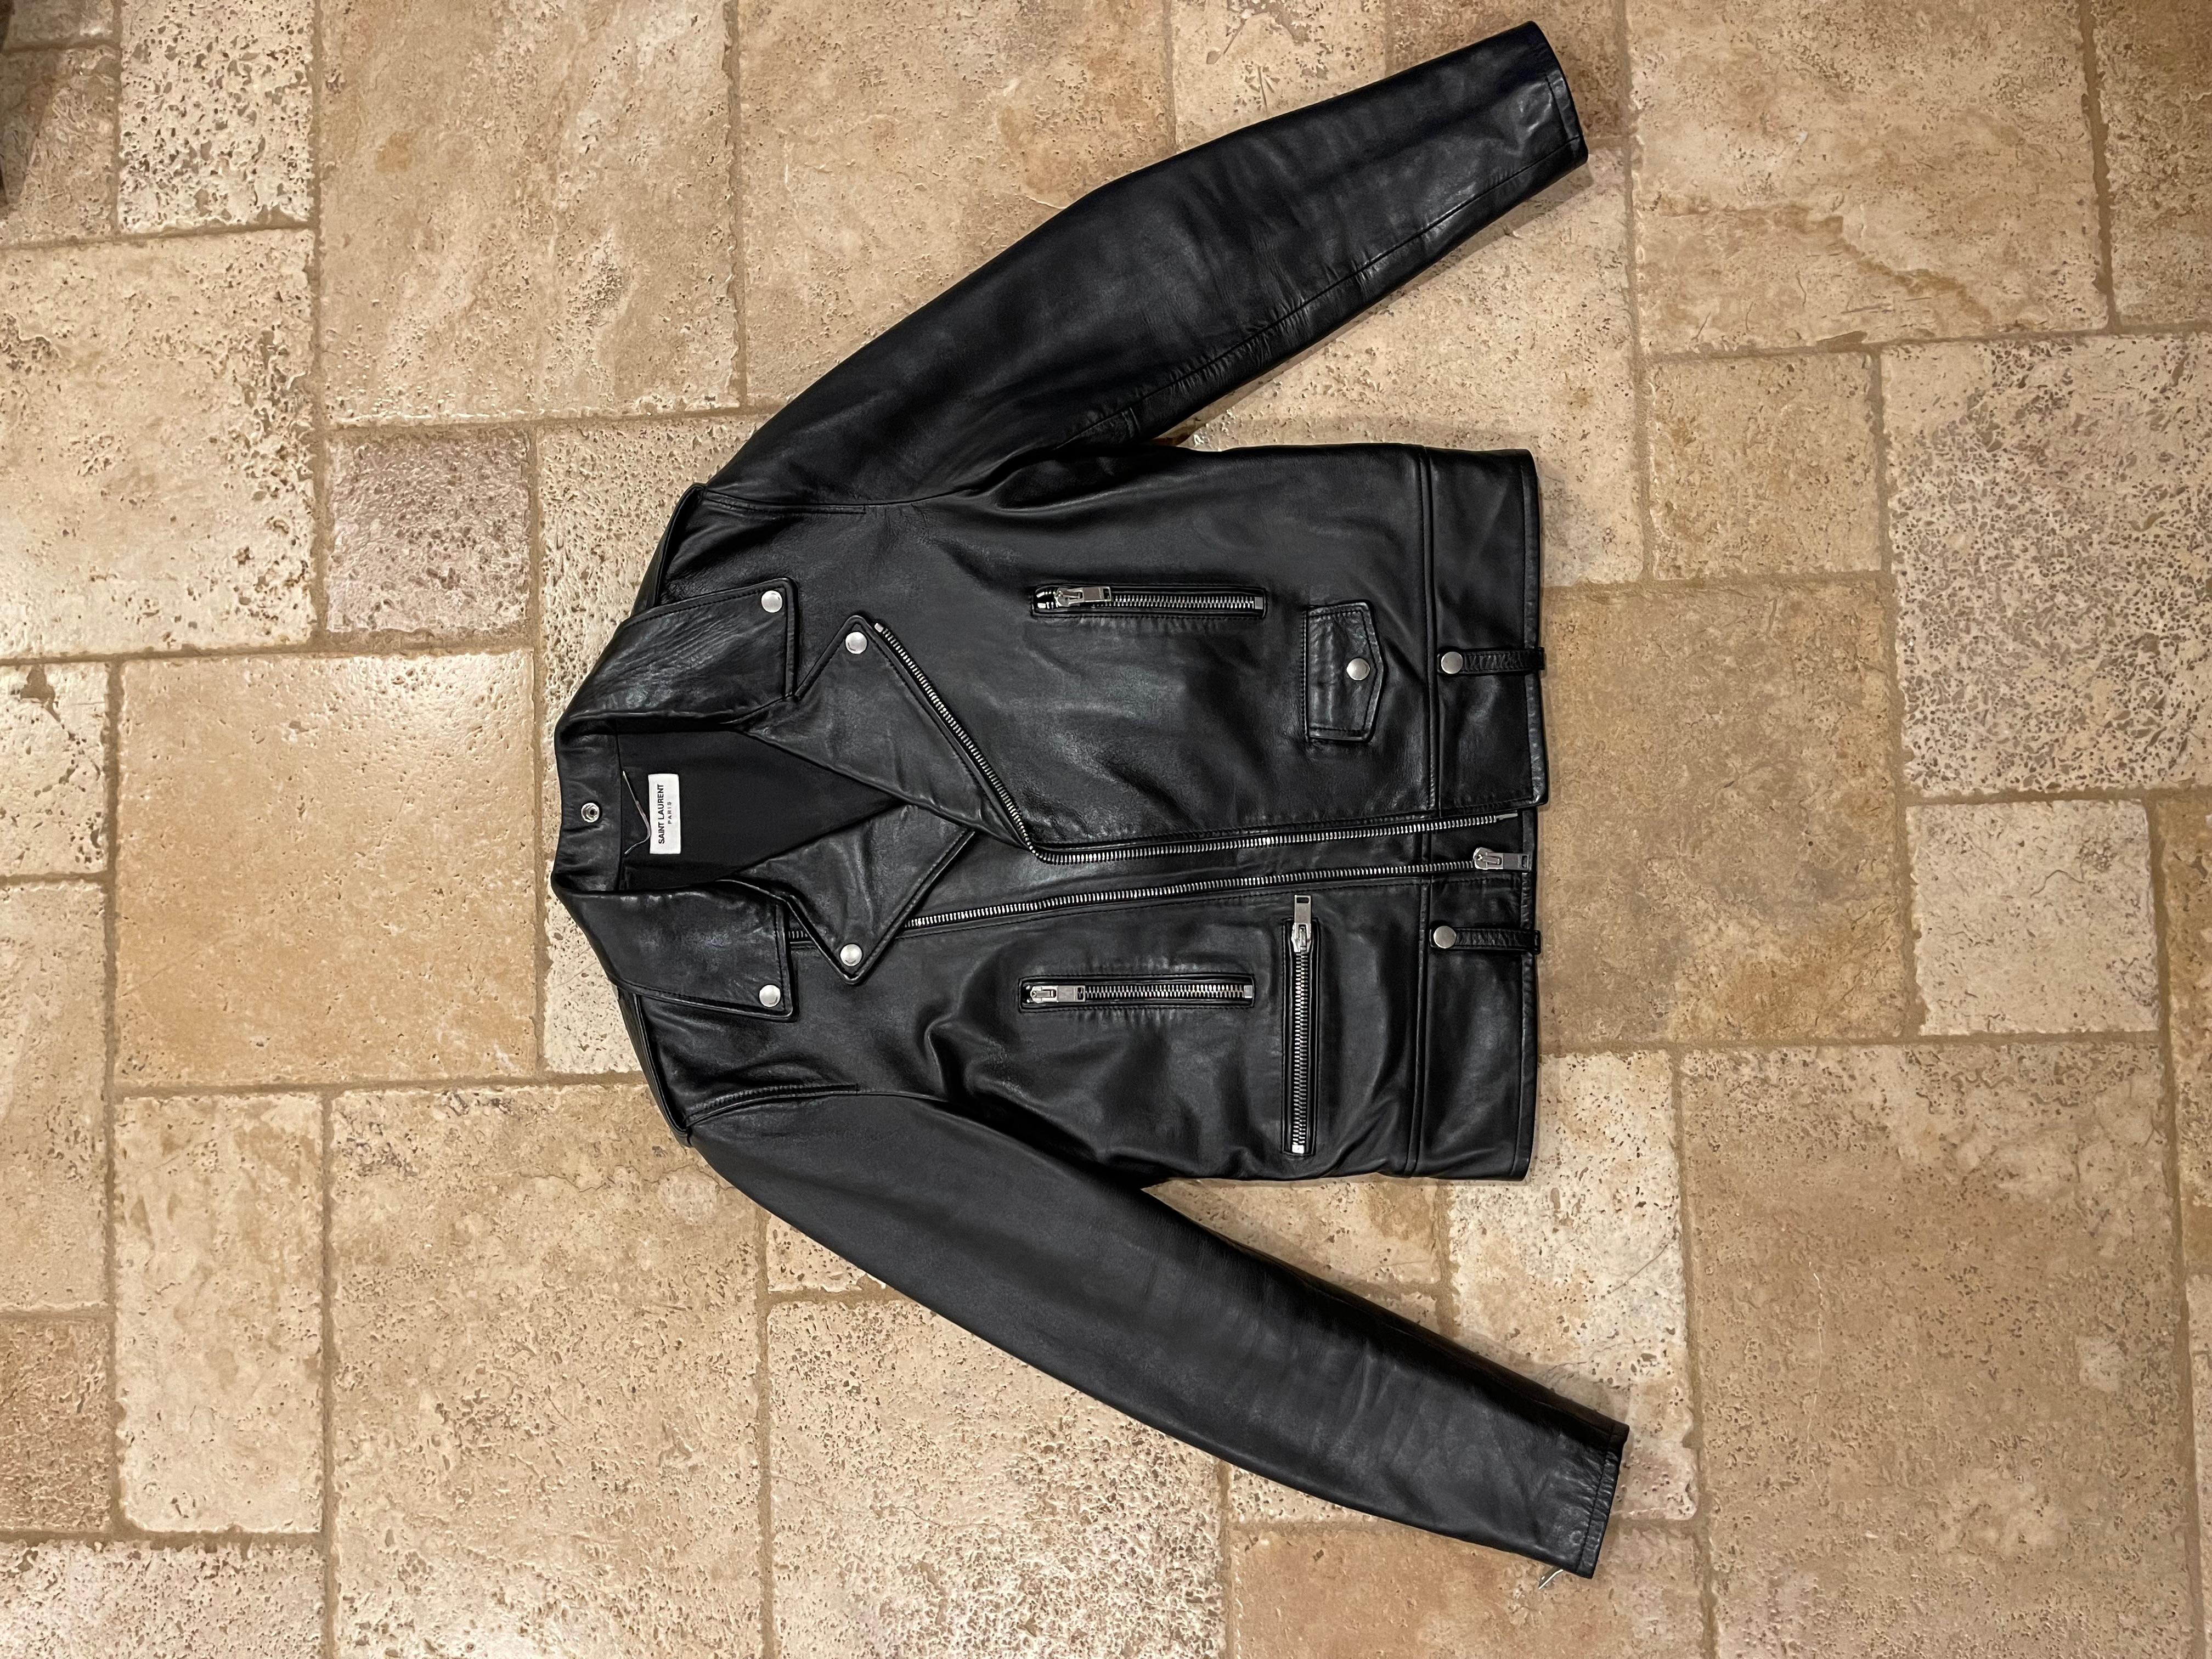 Saint Laurent SS16 L01 Lamb Leather Biker Jacket - Hedi Era size 52